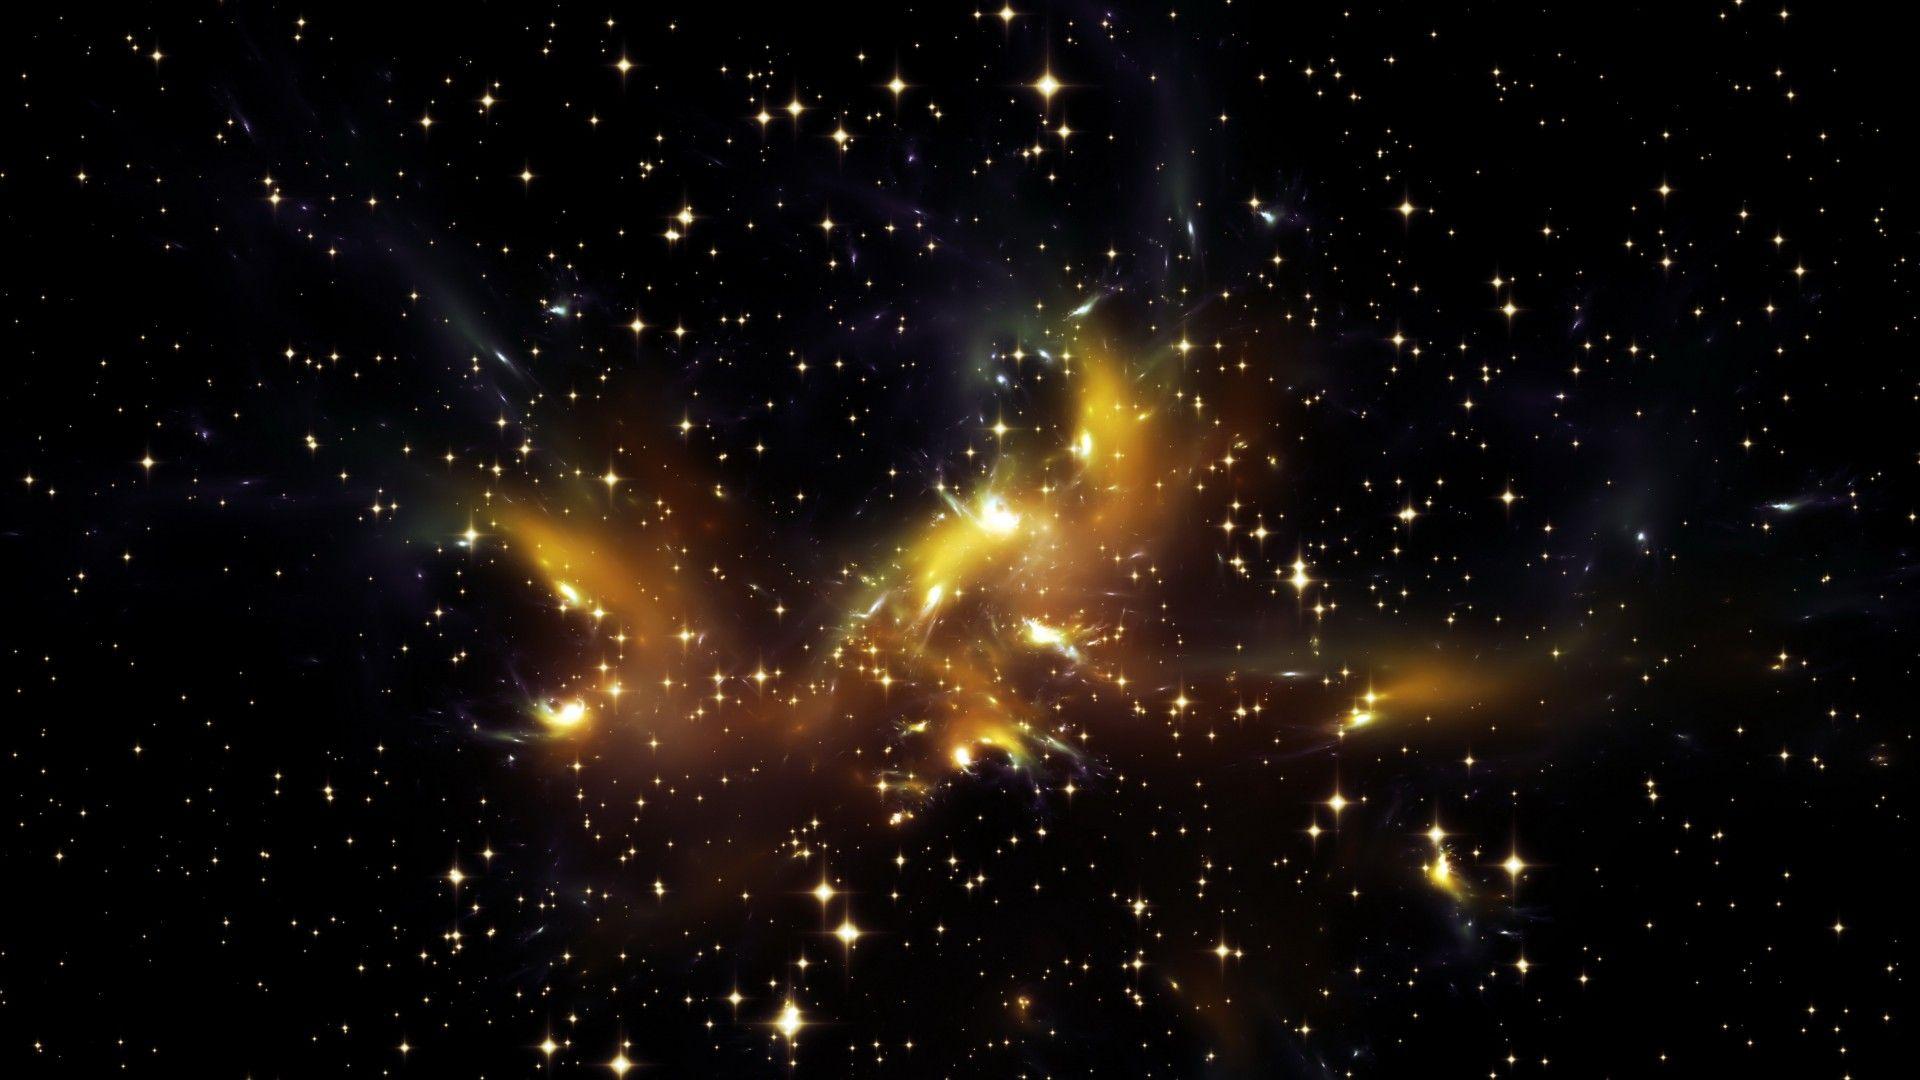 фото космоса со звездами